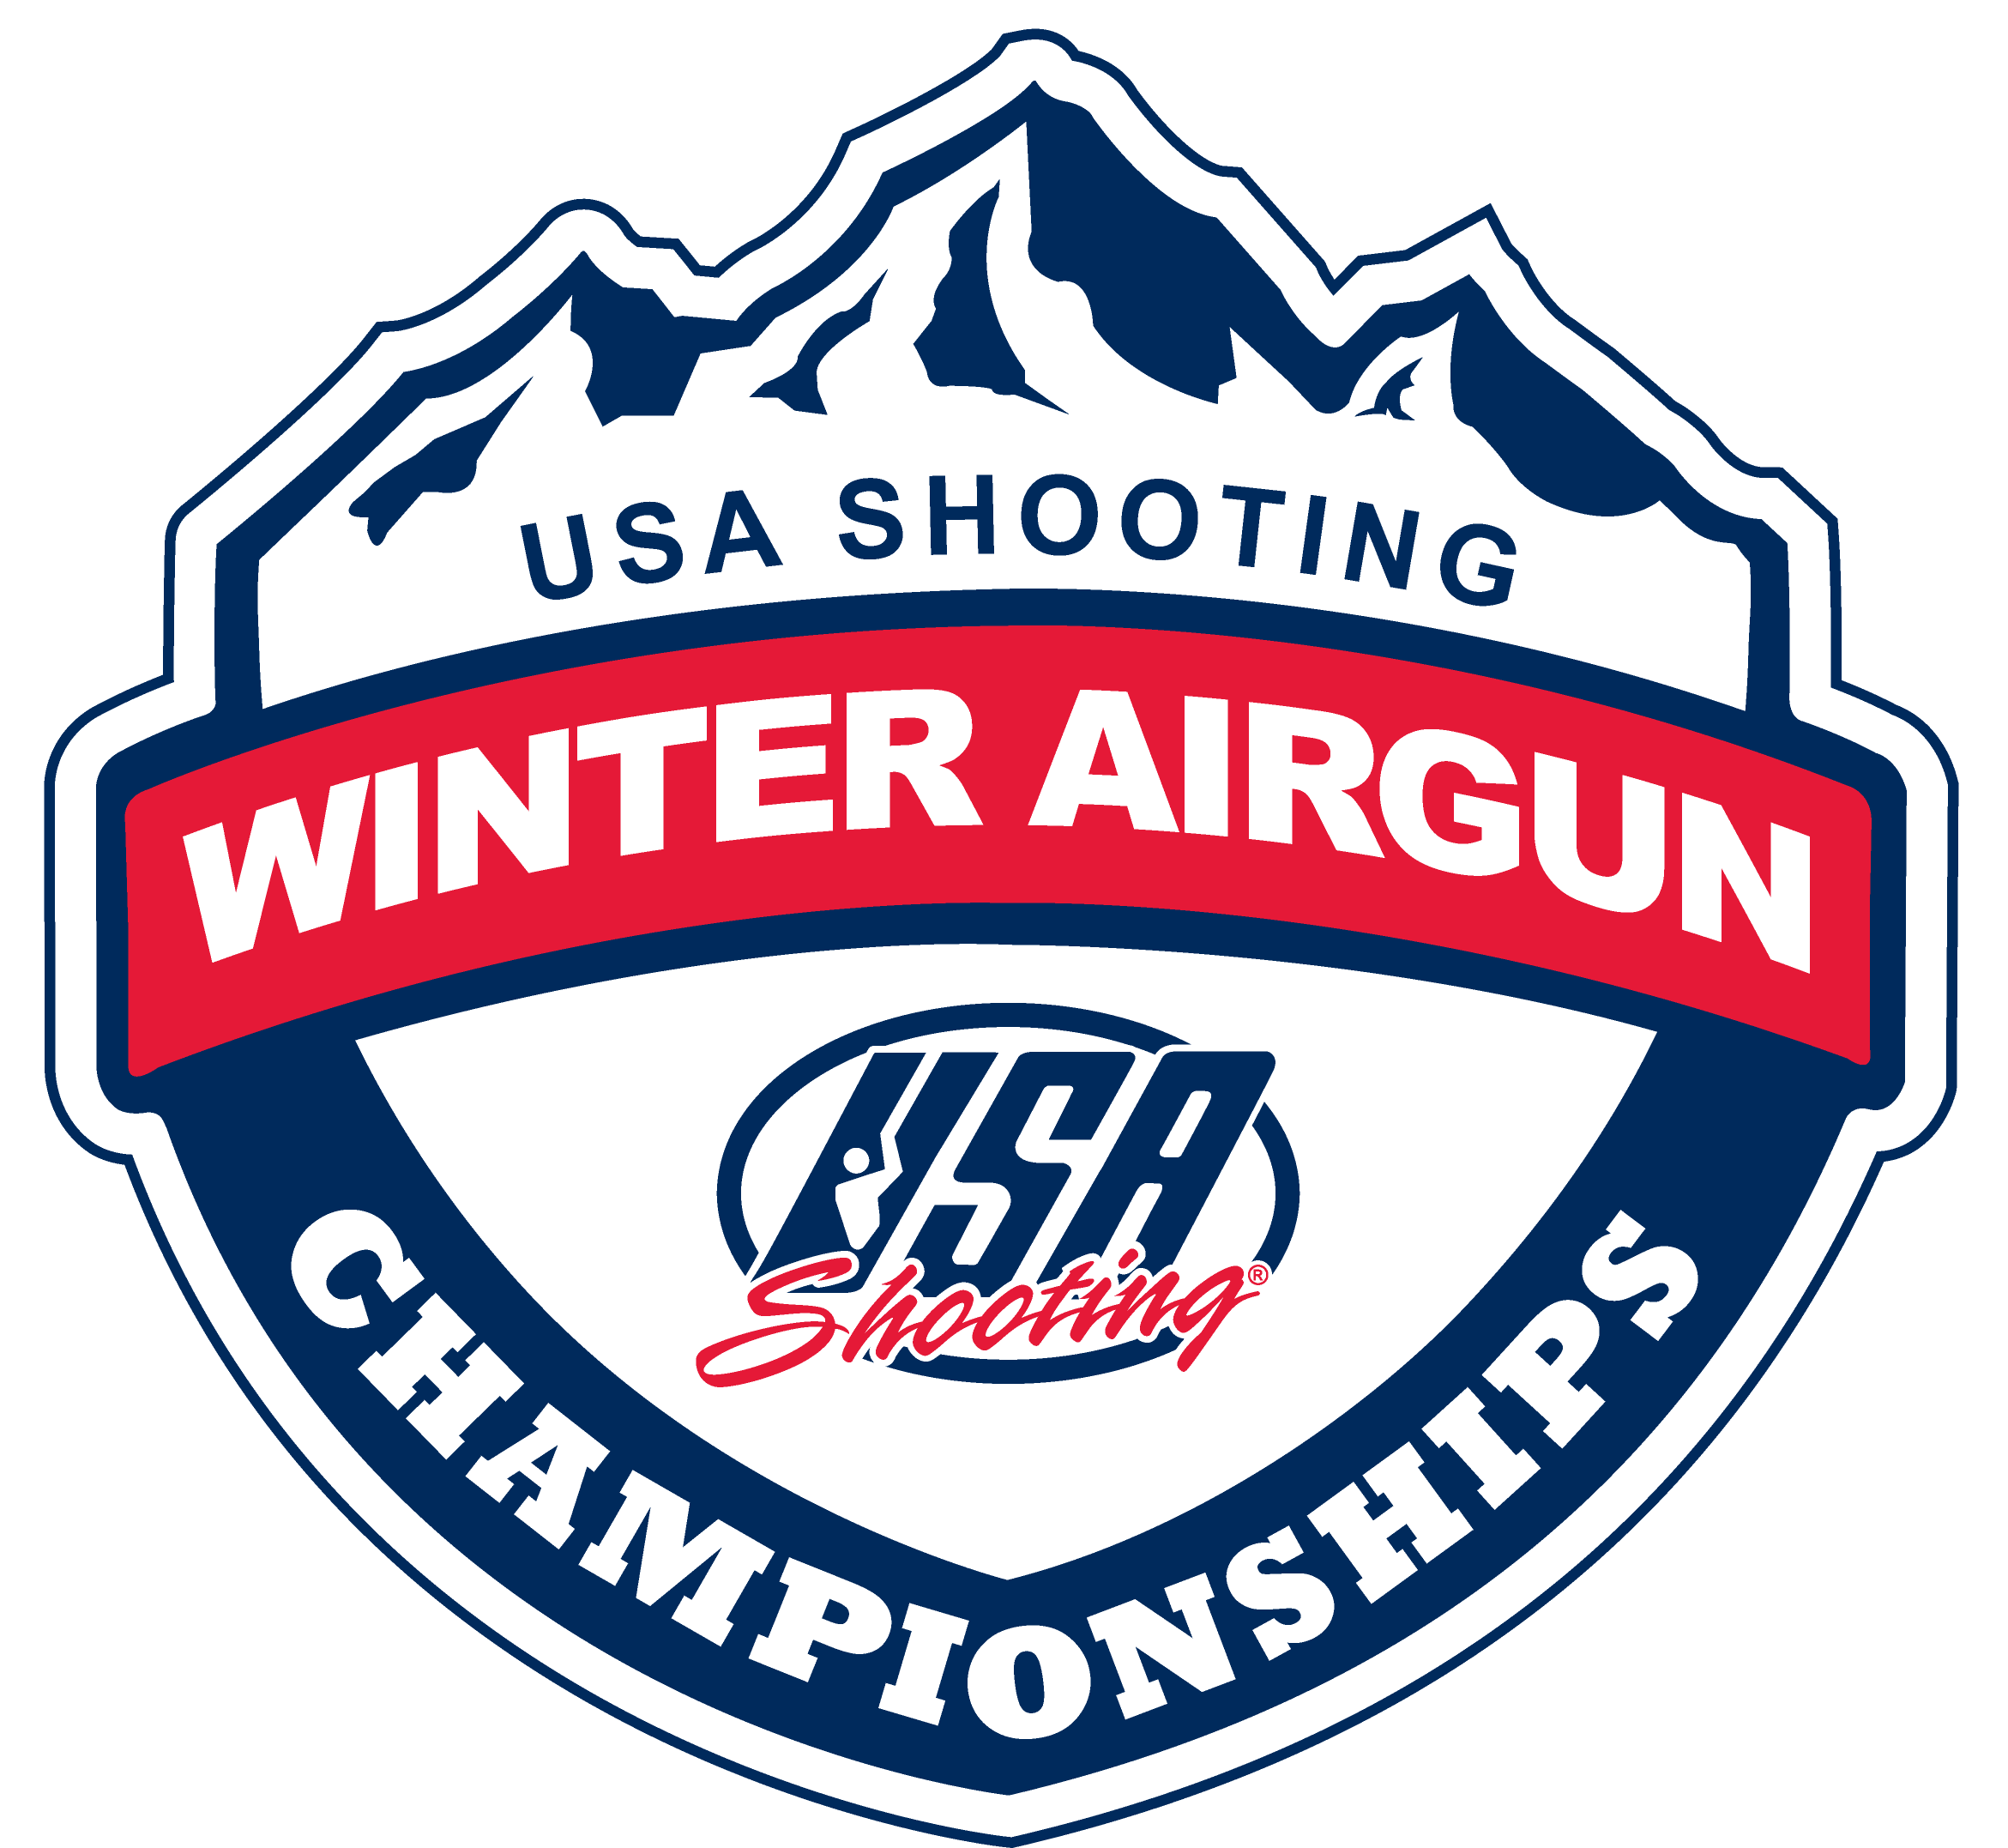 Air Gun Logo - Weisz & Lagan Heat Up 2018 Winter Airgun Championships with Top ...